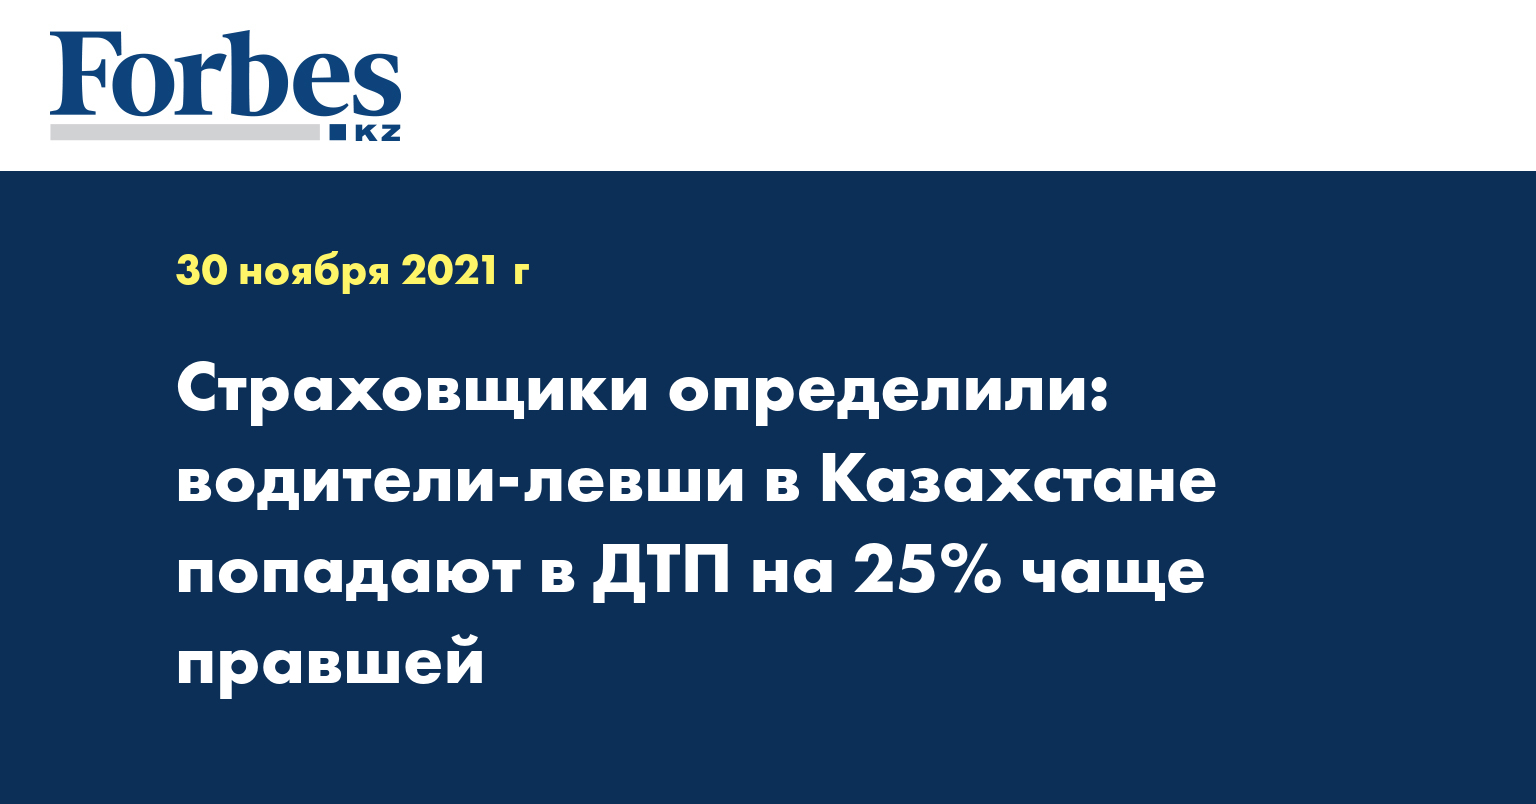 Страховщики определили: водители-левши в Казахстане попадают в ДТП на 25% чаще правшей